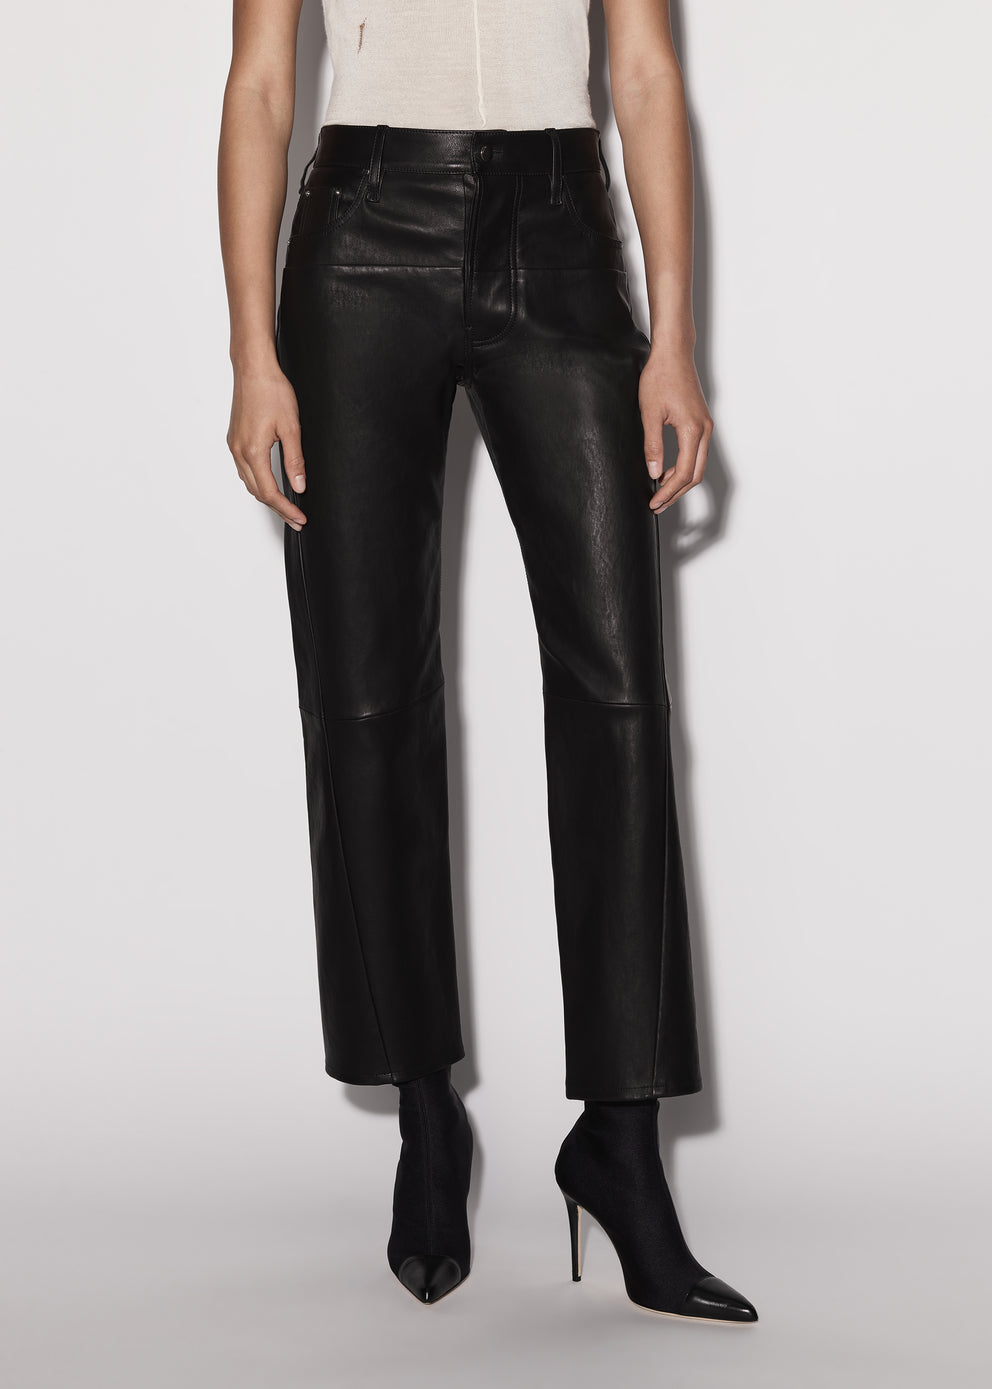 Leather Amiri Cuero 5 Pocket Directo Pant Mujer Negras | 9724-BTYDK